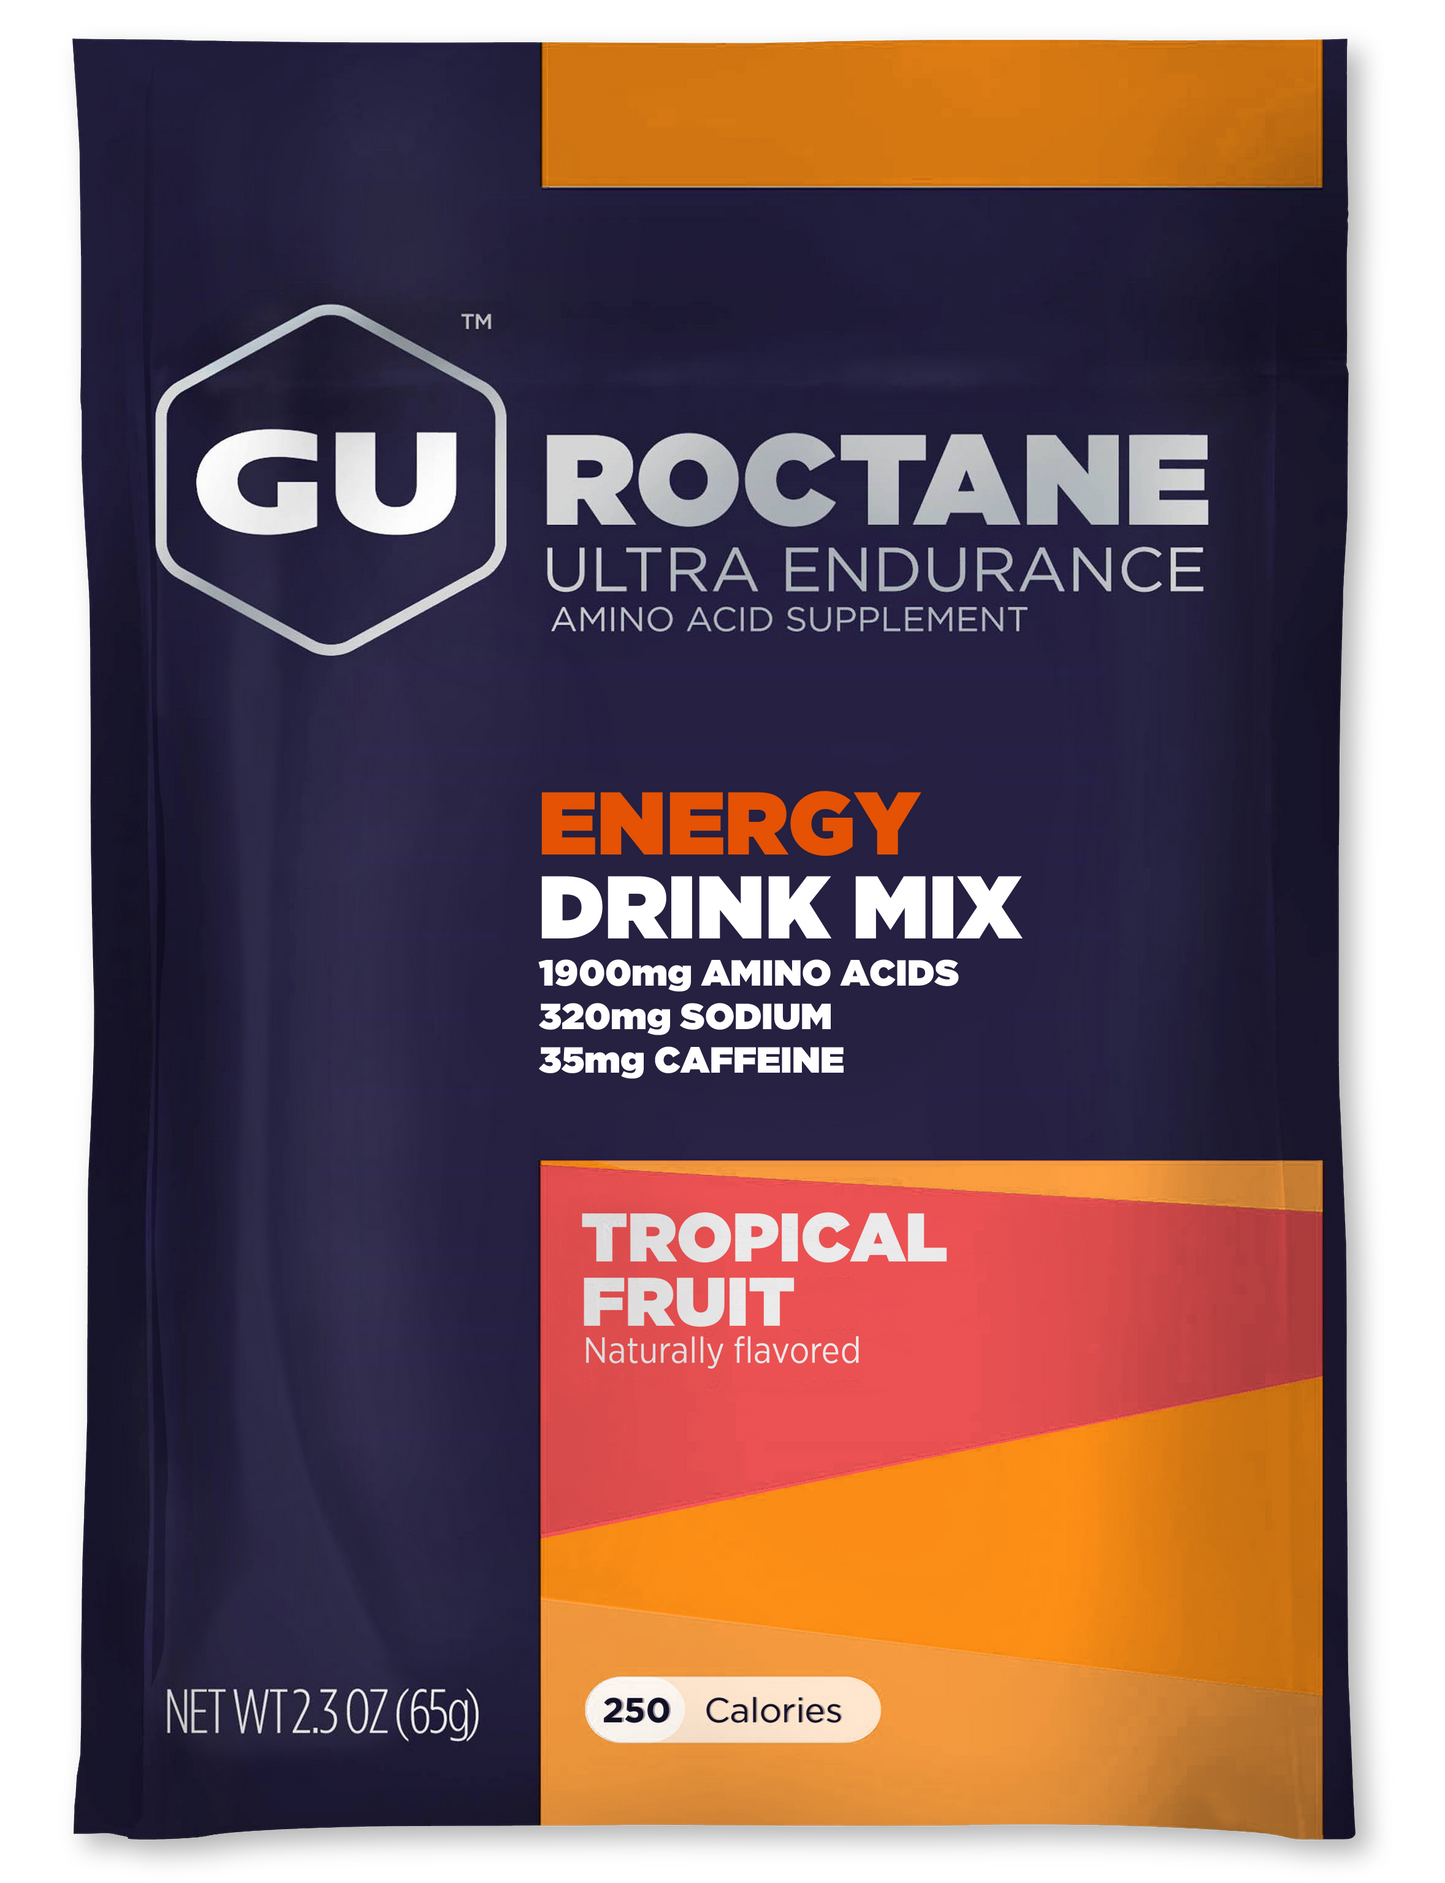 Roctane Energy Drink Mix